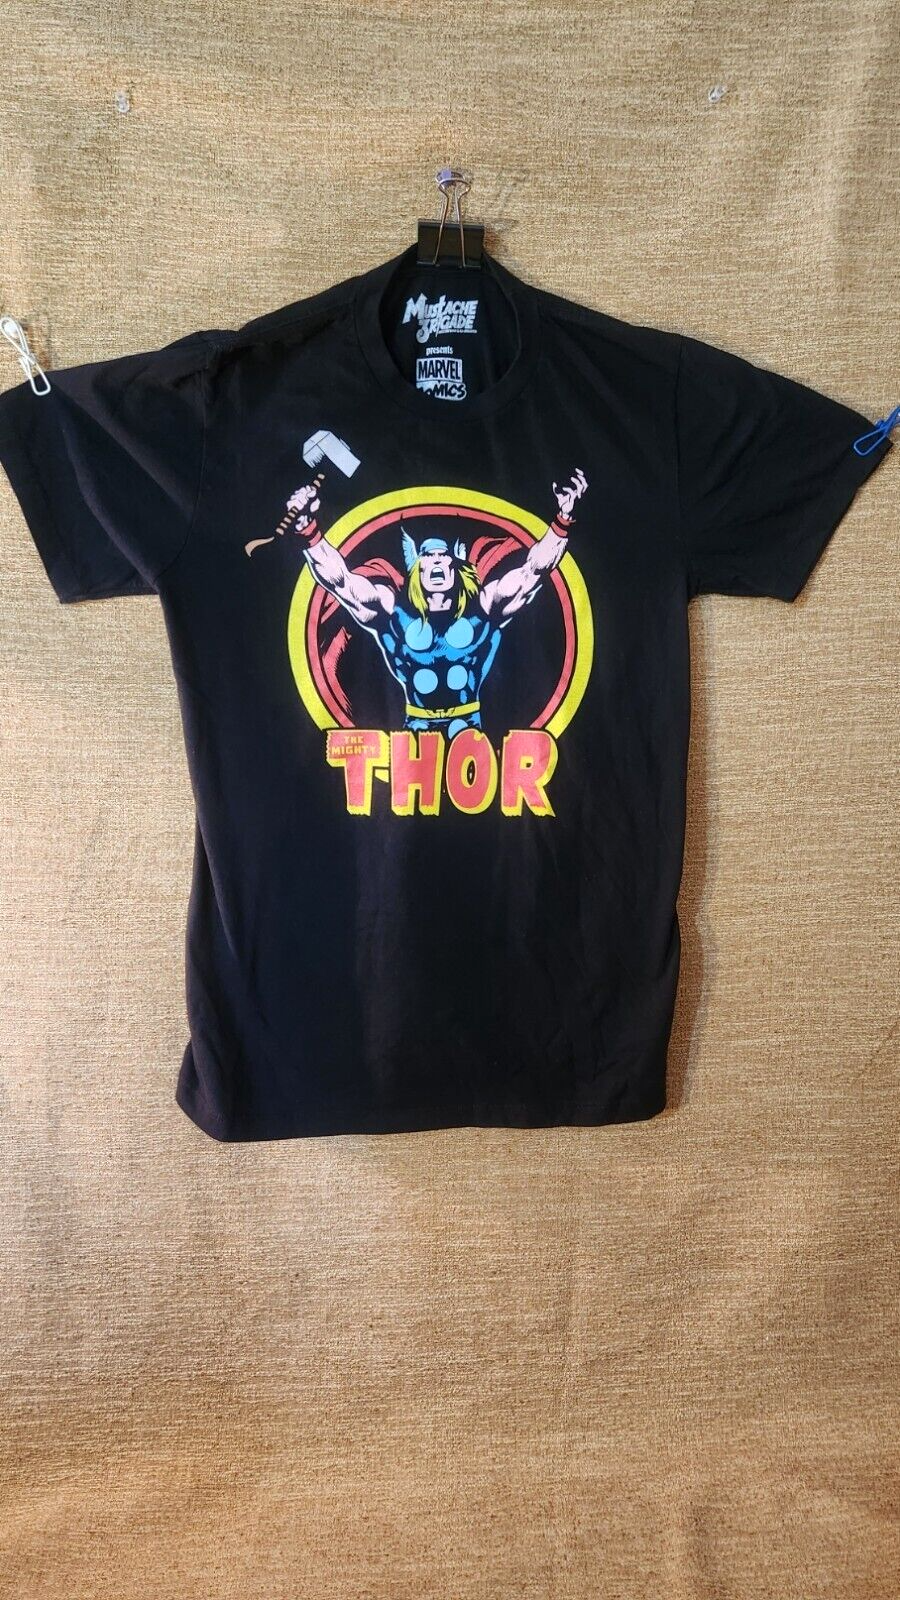 Thor T Shirt Marvel Boys/Childs Medium Black - $12.60